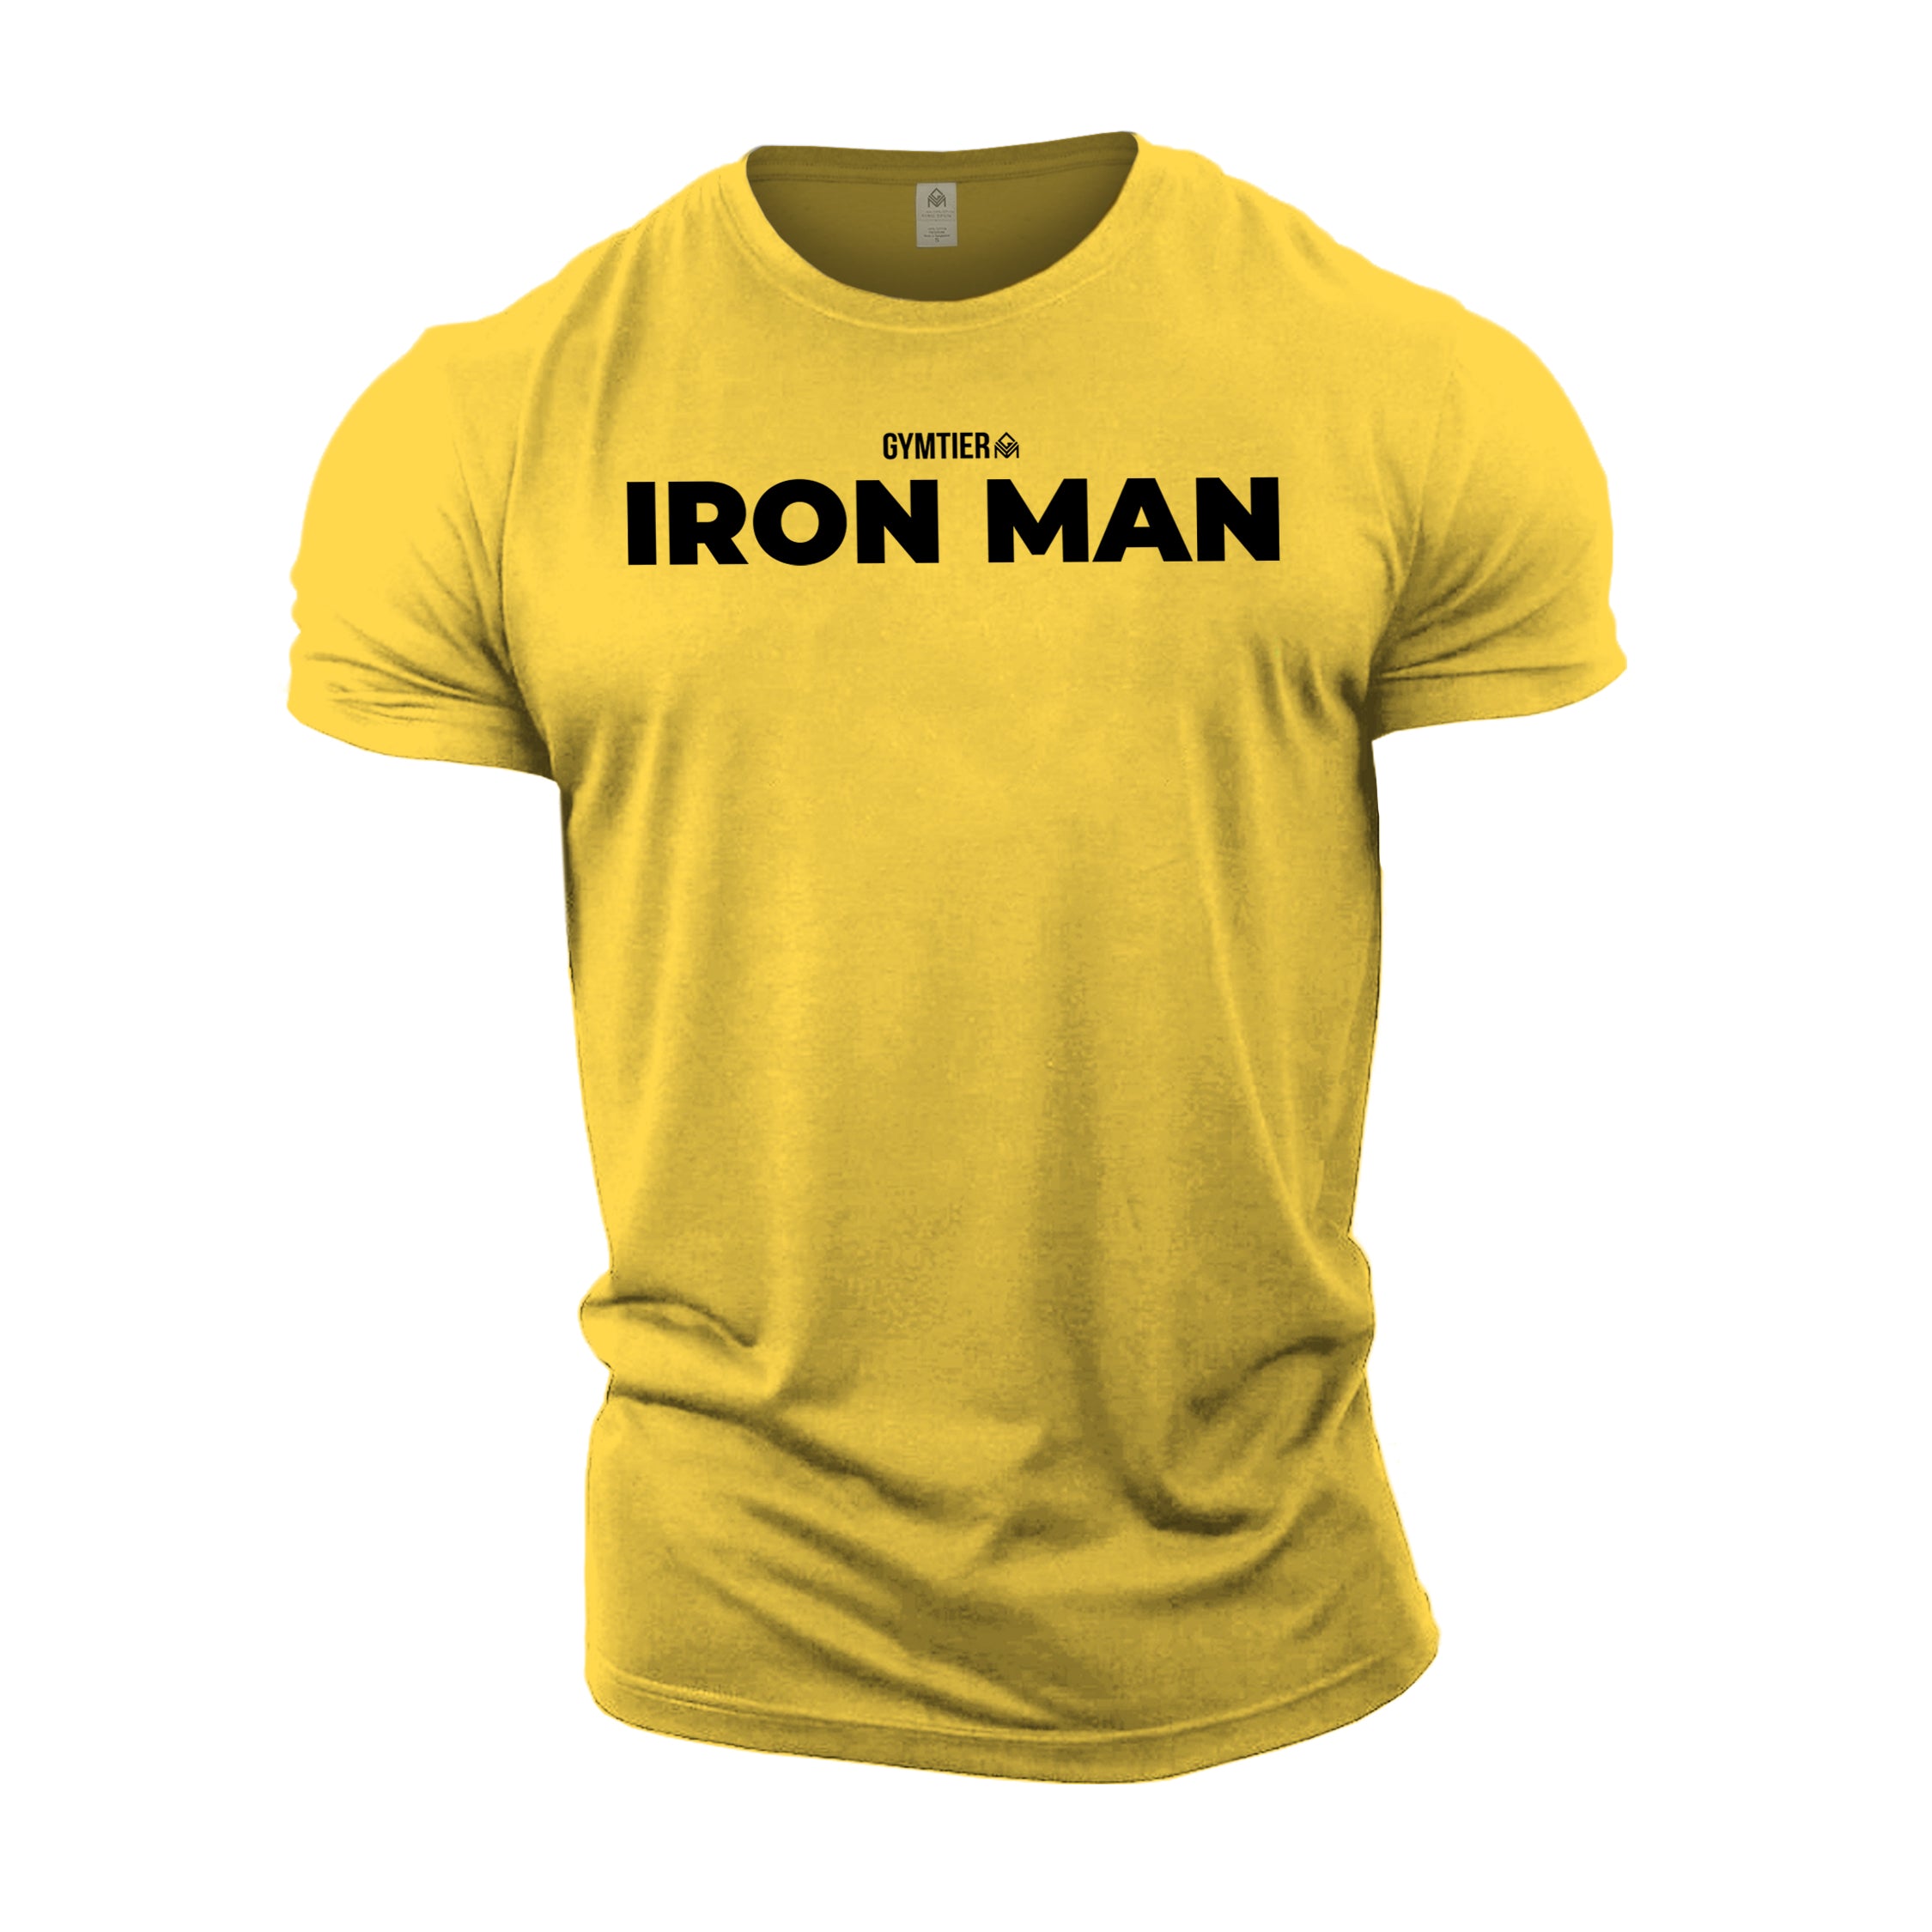 GYMTIER Iron Man - Gym T-Shirt